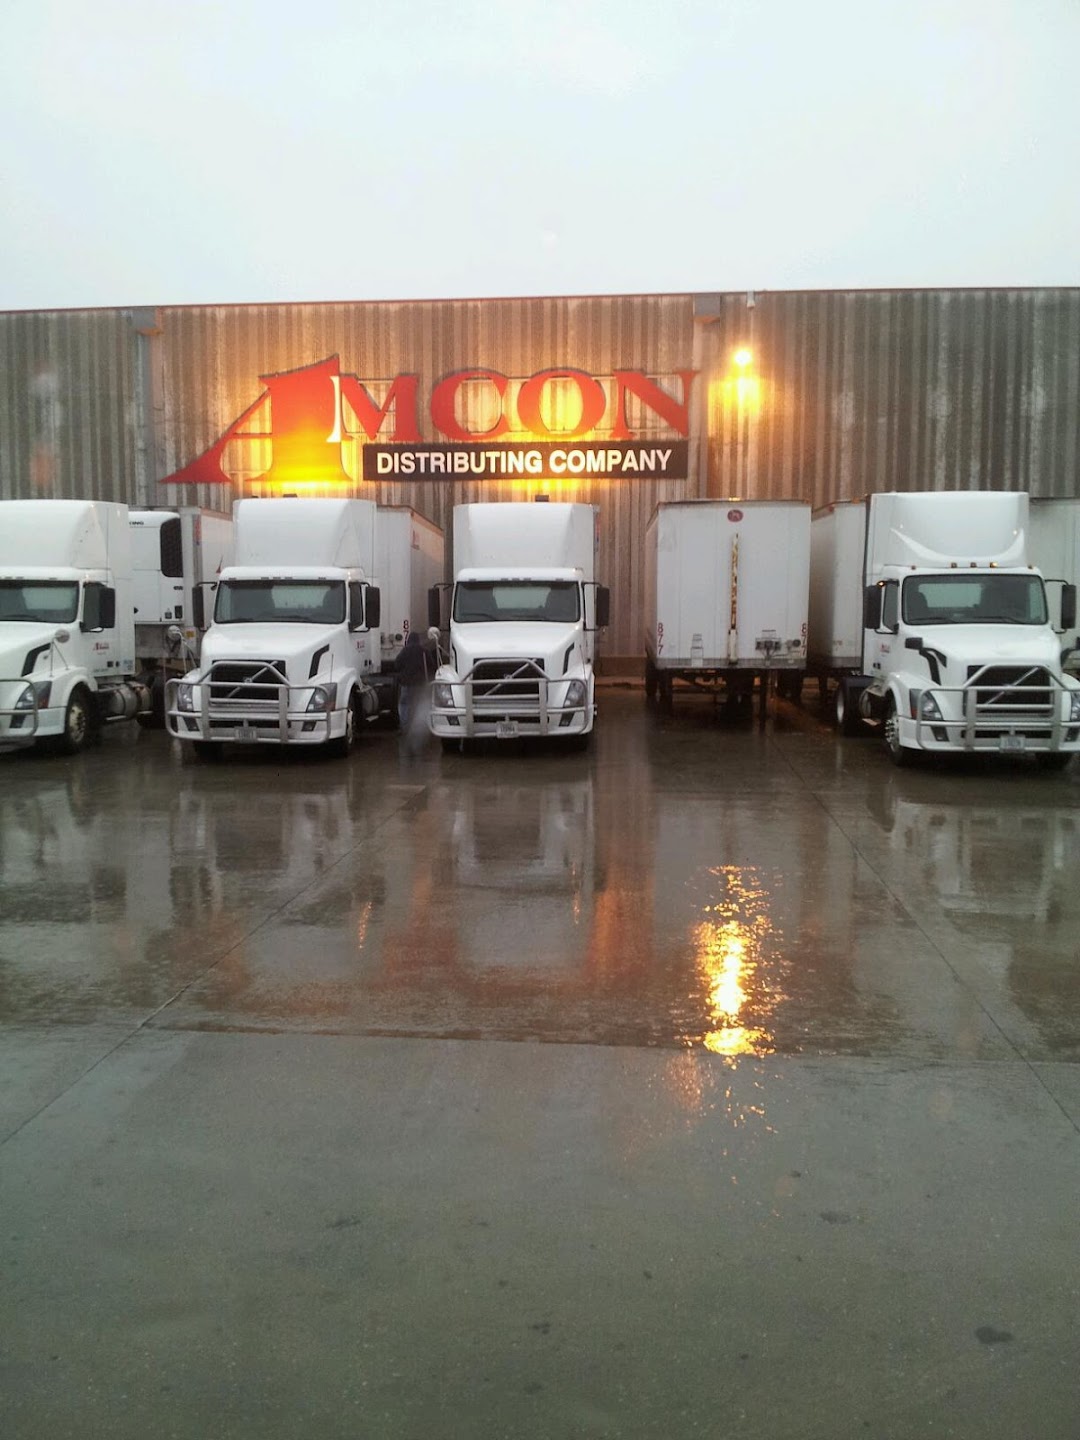 AMCON Distributing Company